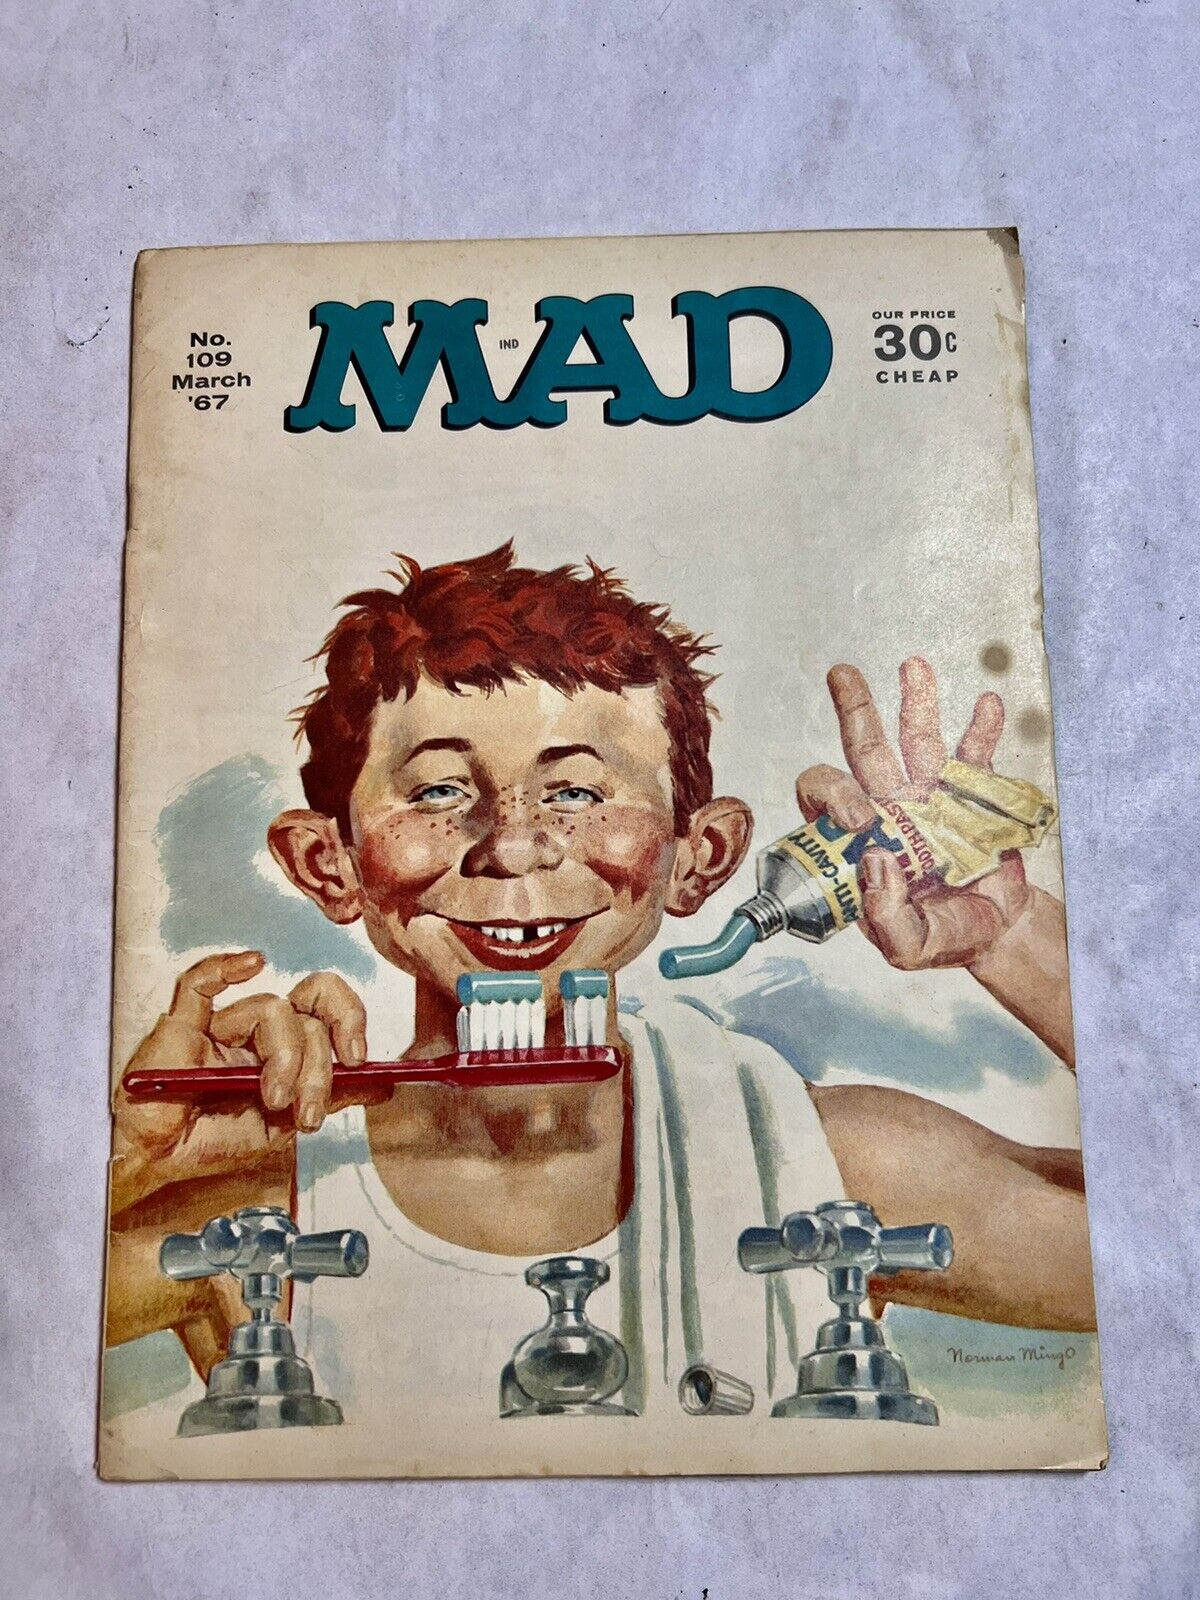 MAD Magazine #109 March 1967 Humor Read Articles Cartoon GOOD CONDITION VINTAGE